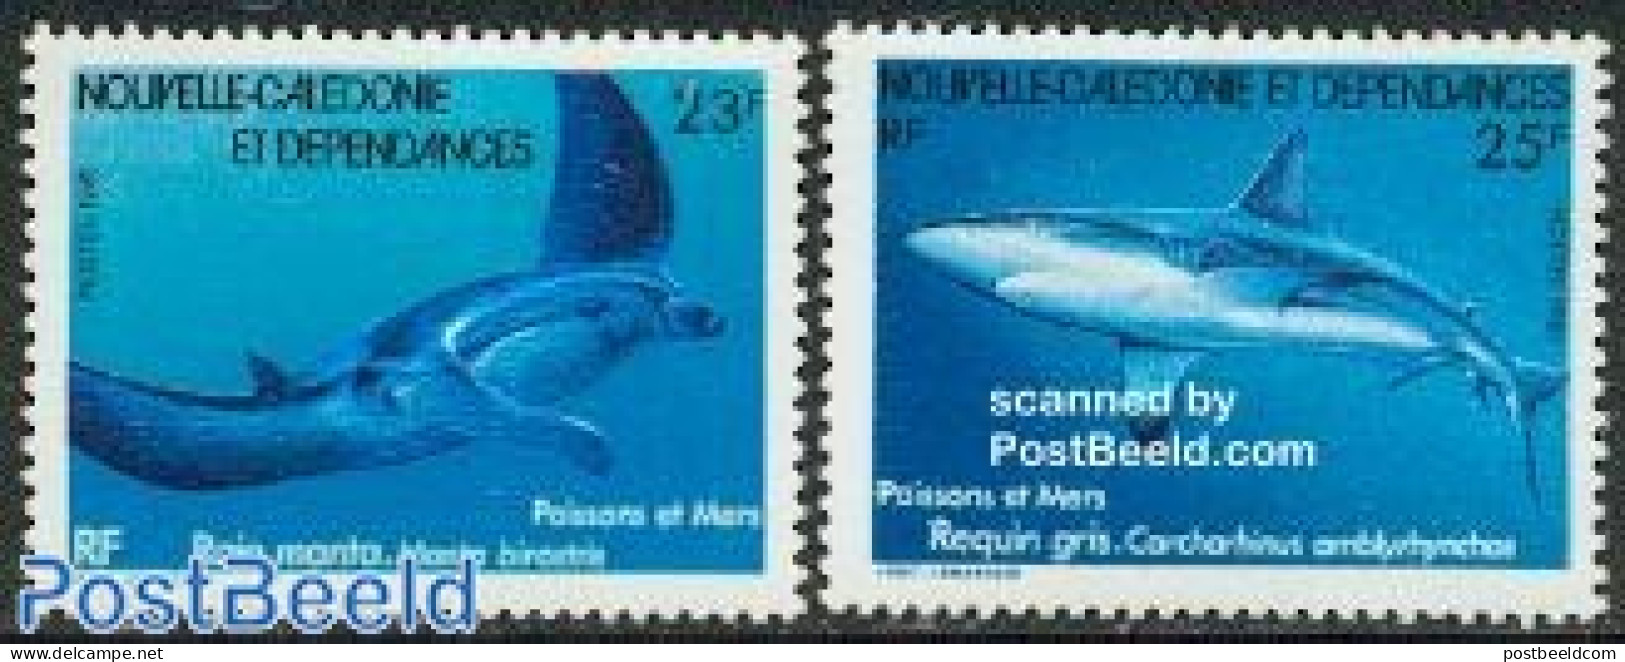 New Caledonia 1981 Fish 2v, Mint NH, Nature - Fish - Sharks - Neufs